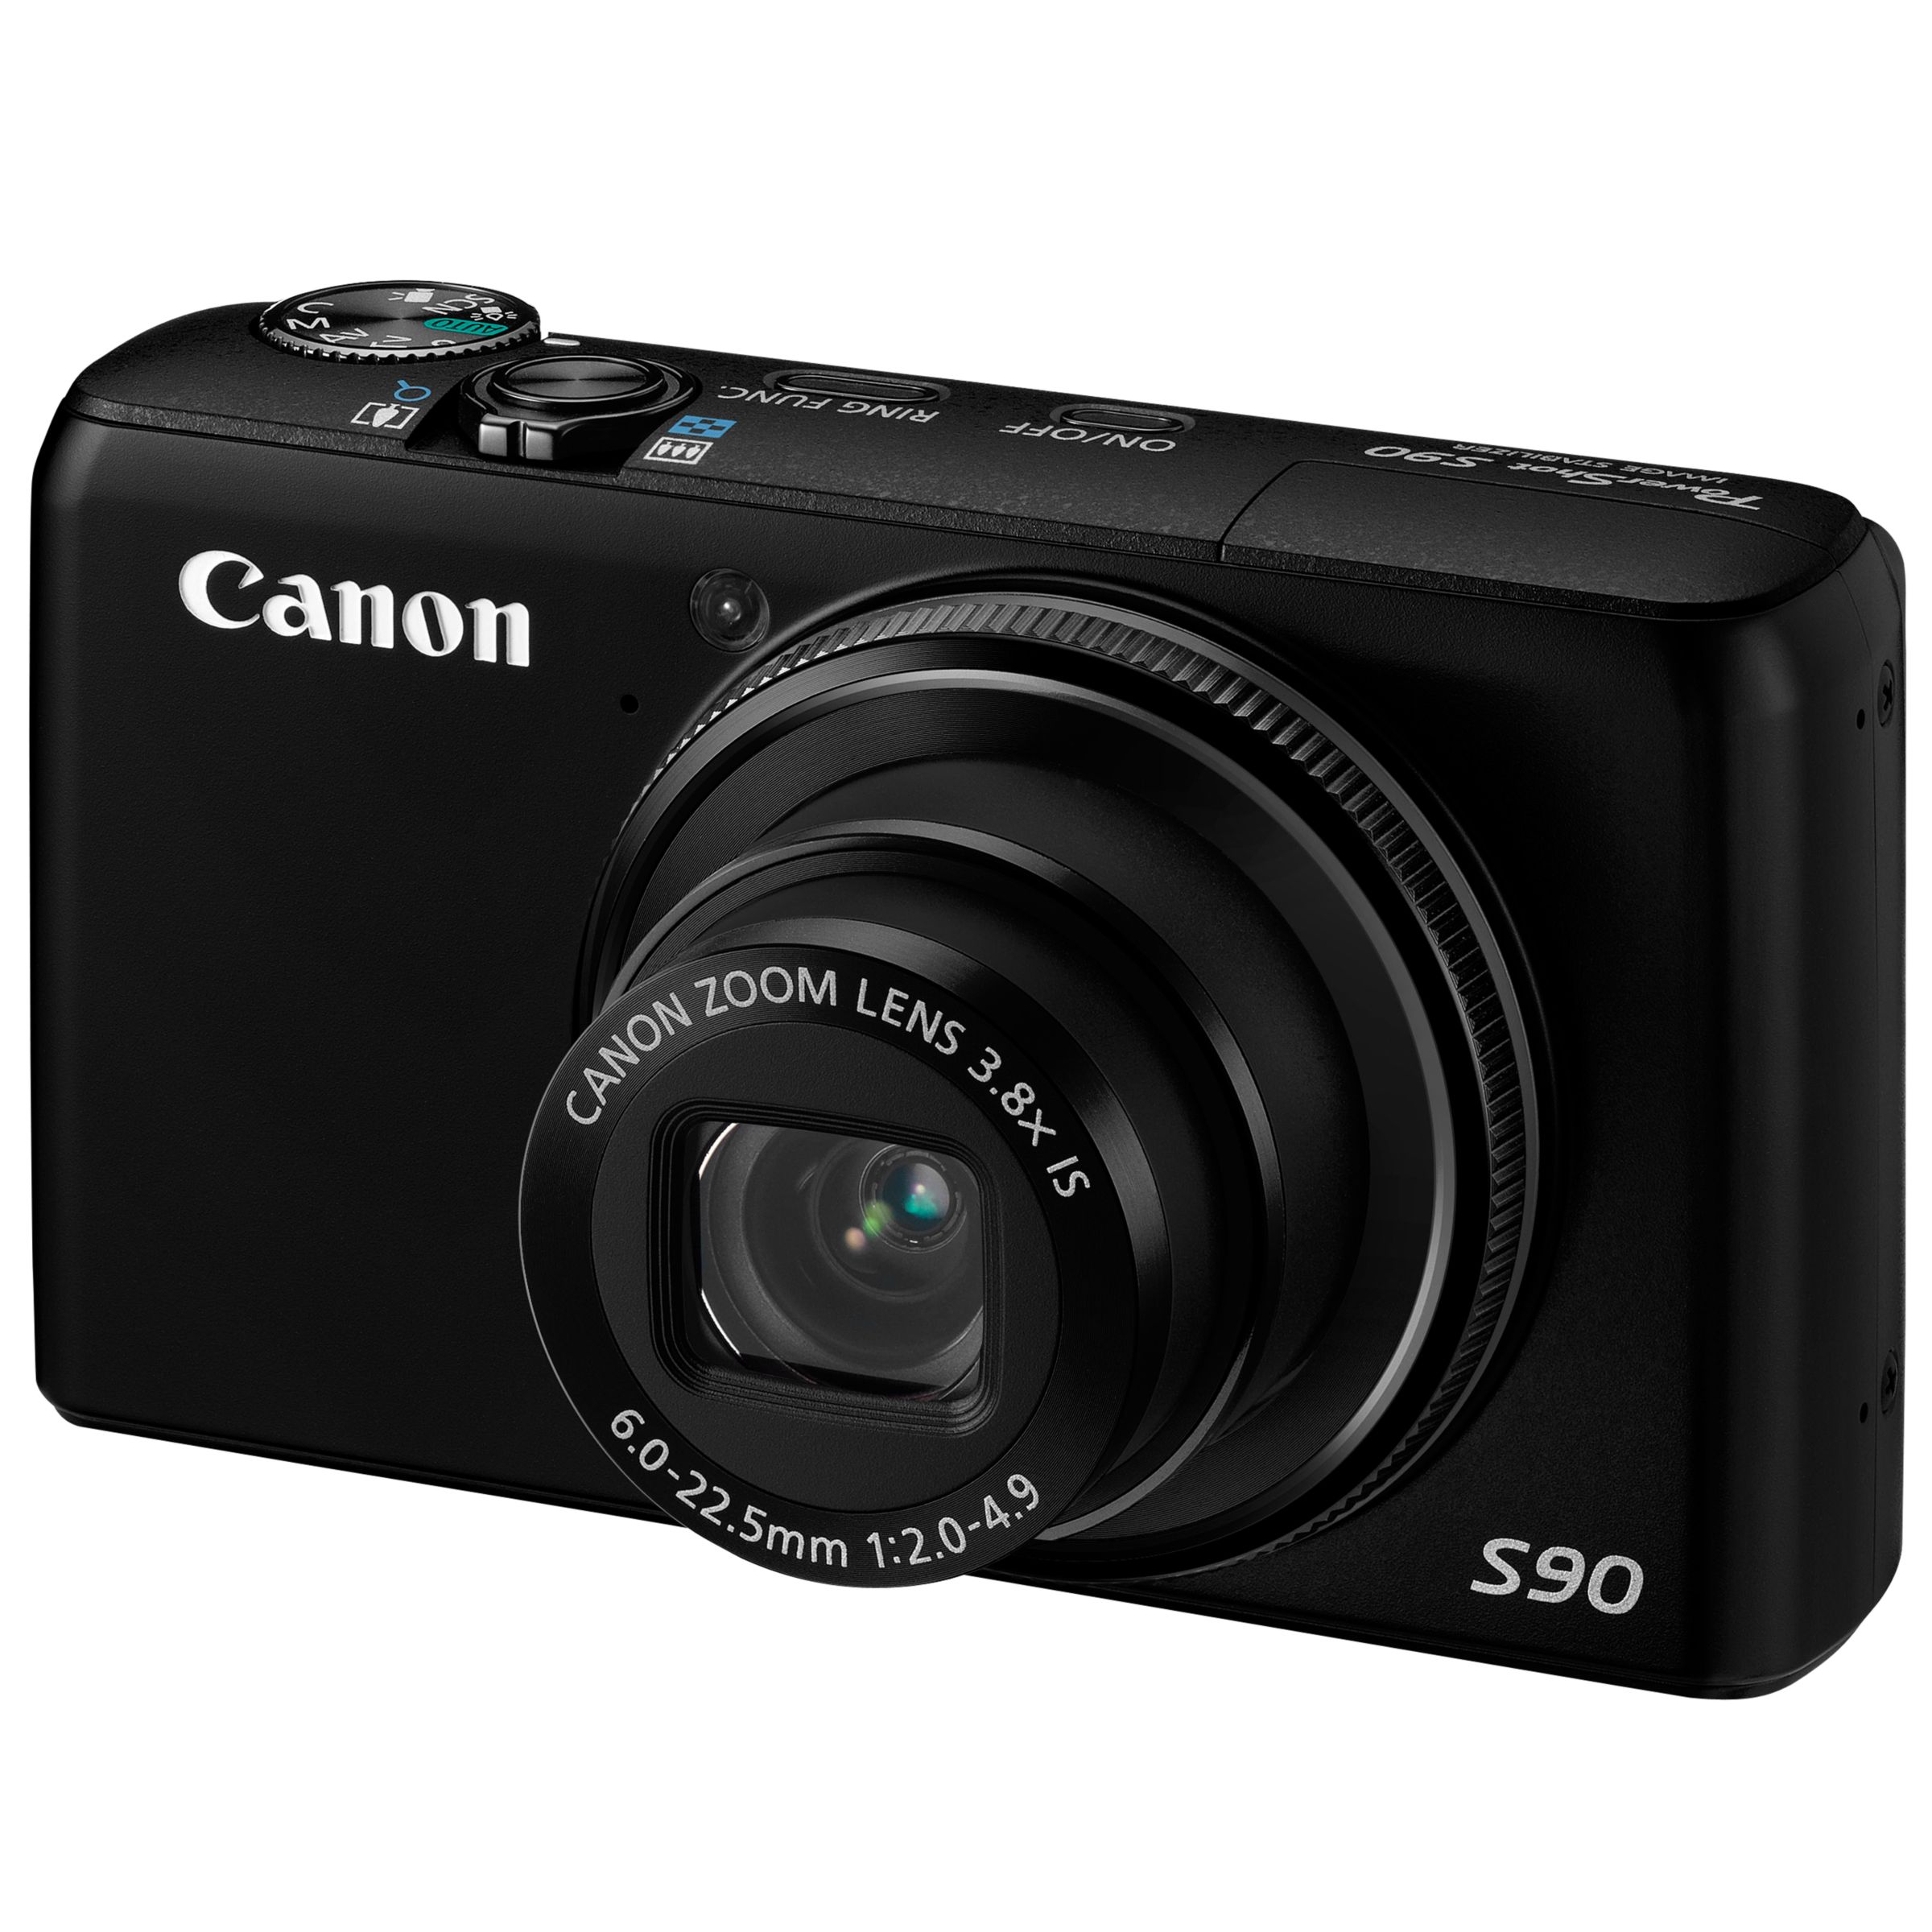 Canon Powershot S90 Digital Camera at John Lewis